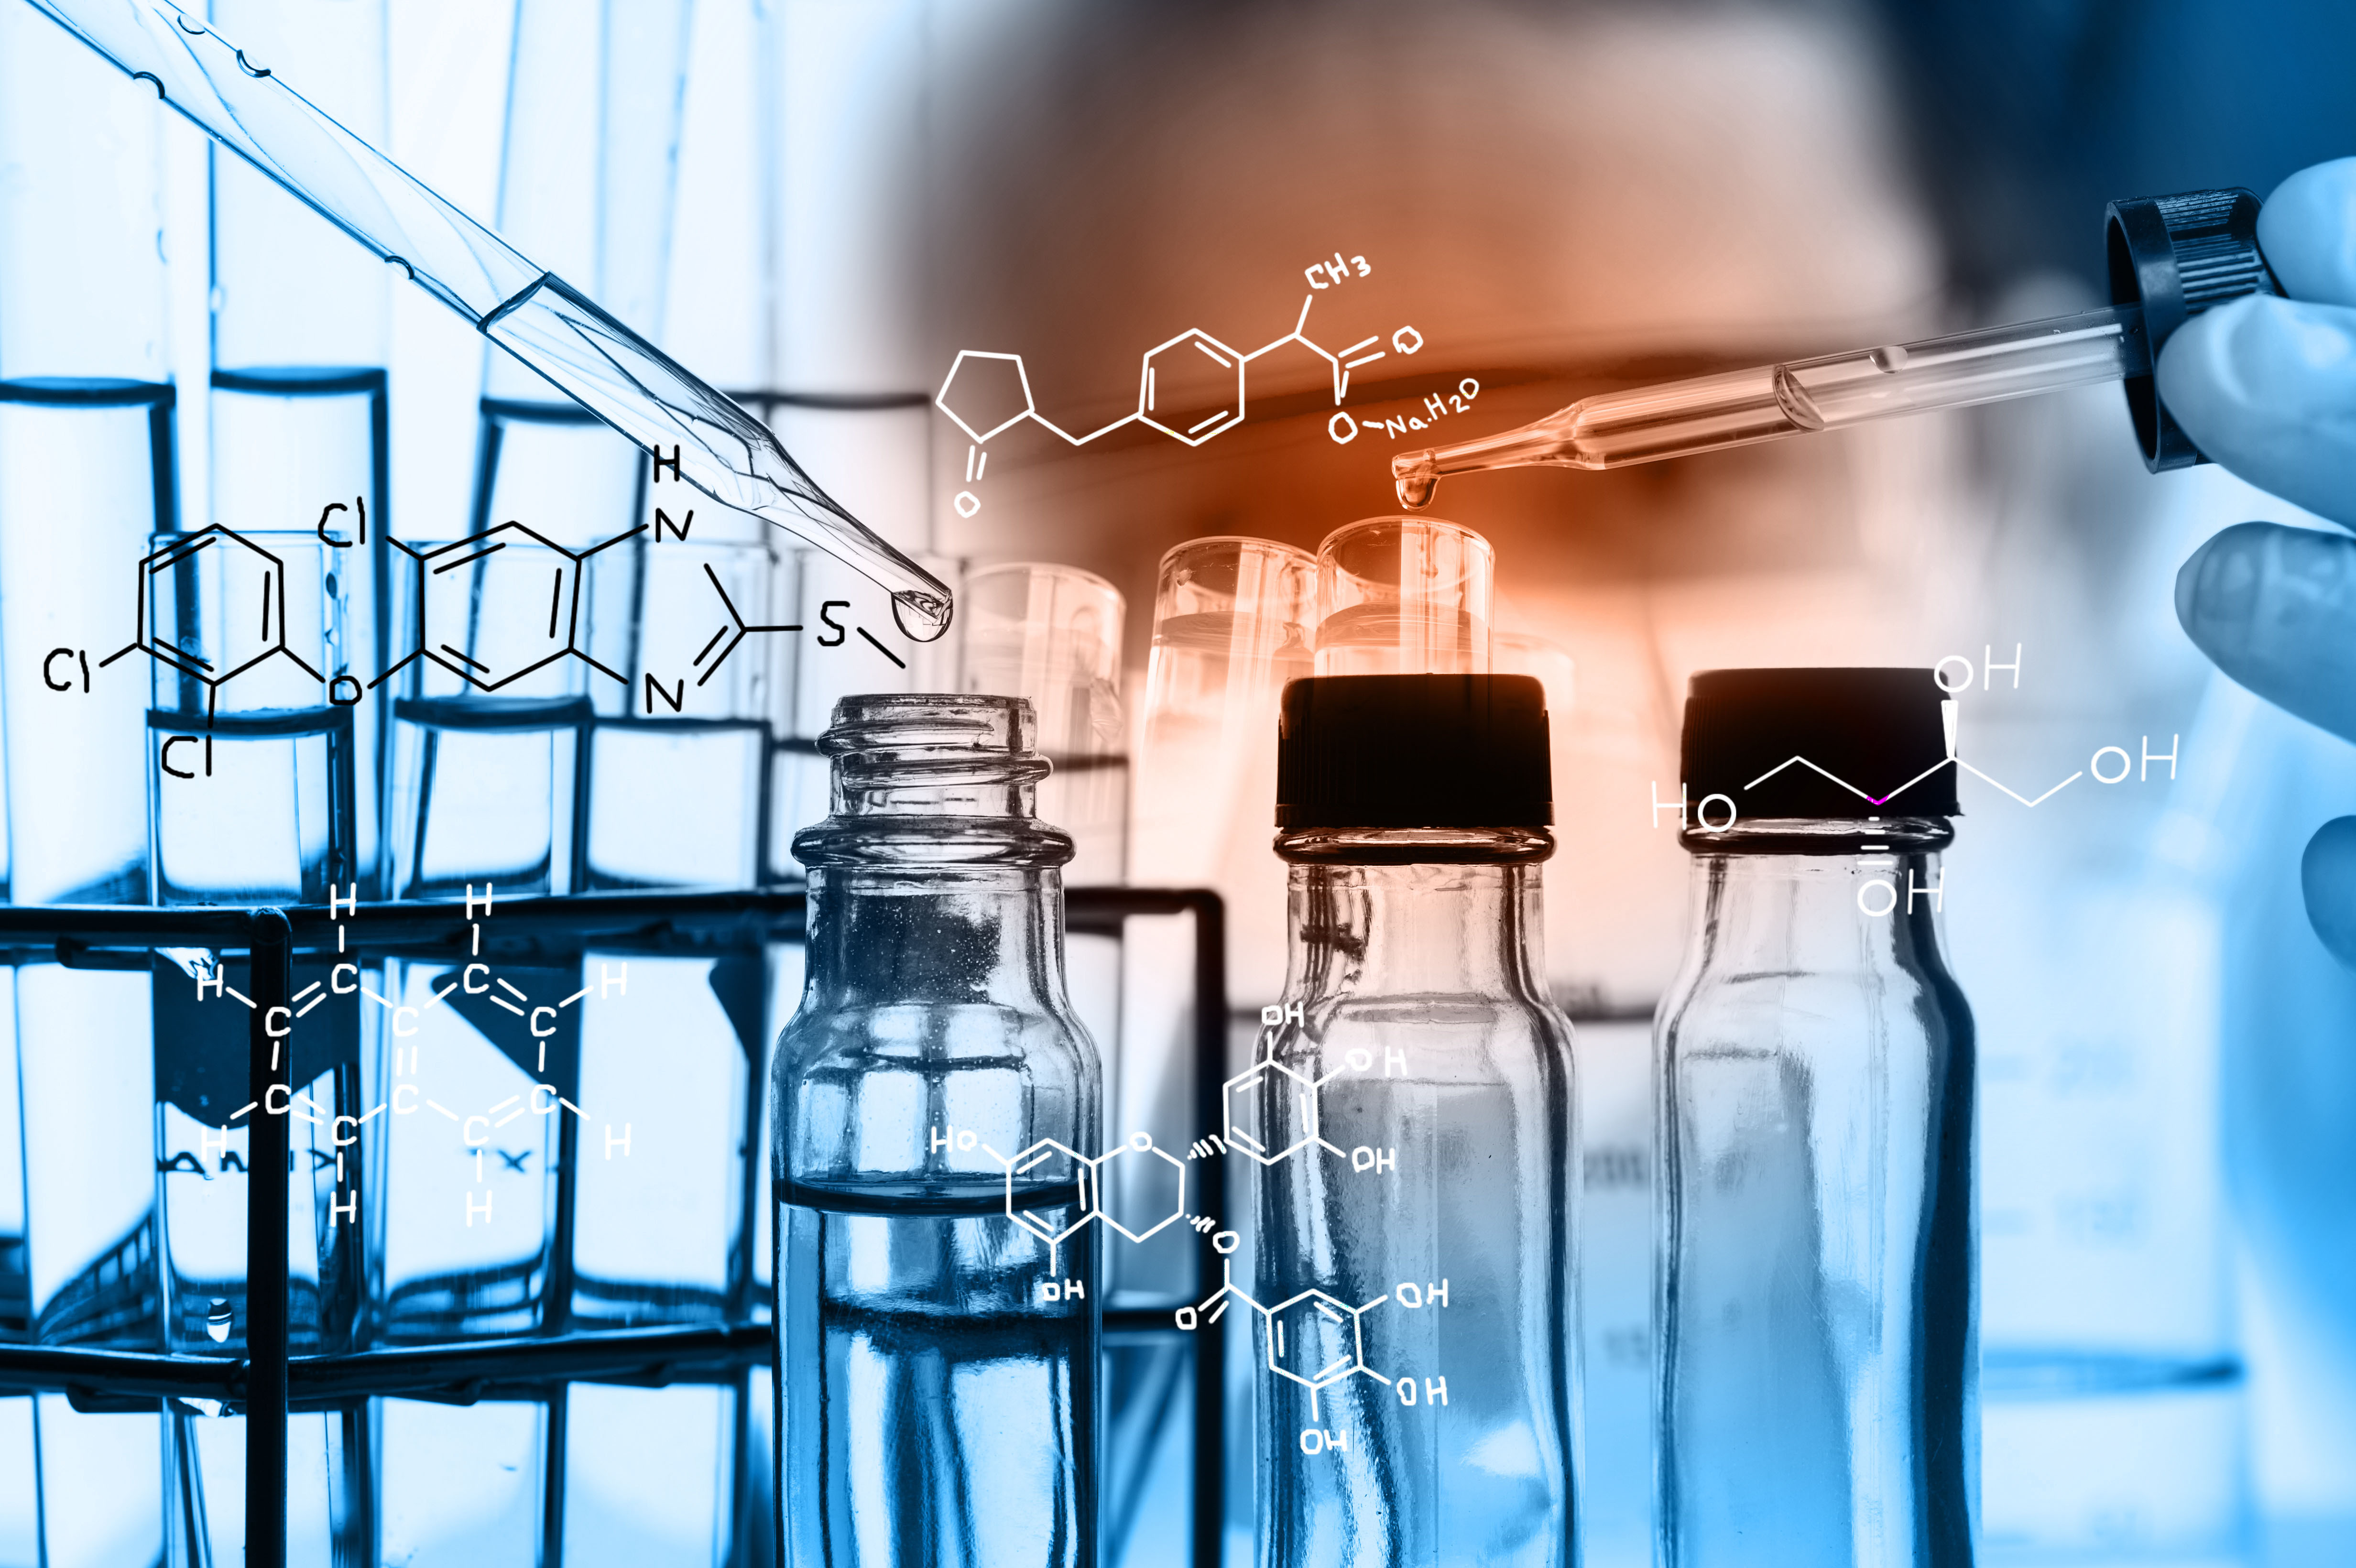 Laboratory glassware containing chemical liquid, science researc - BOVA